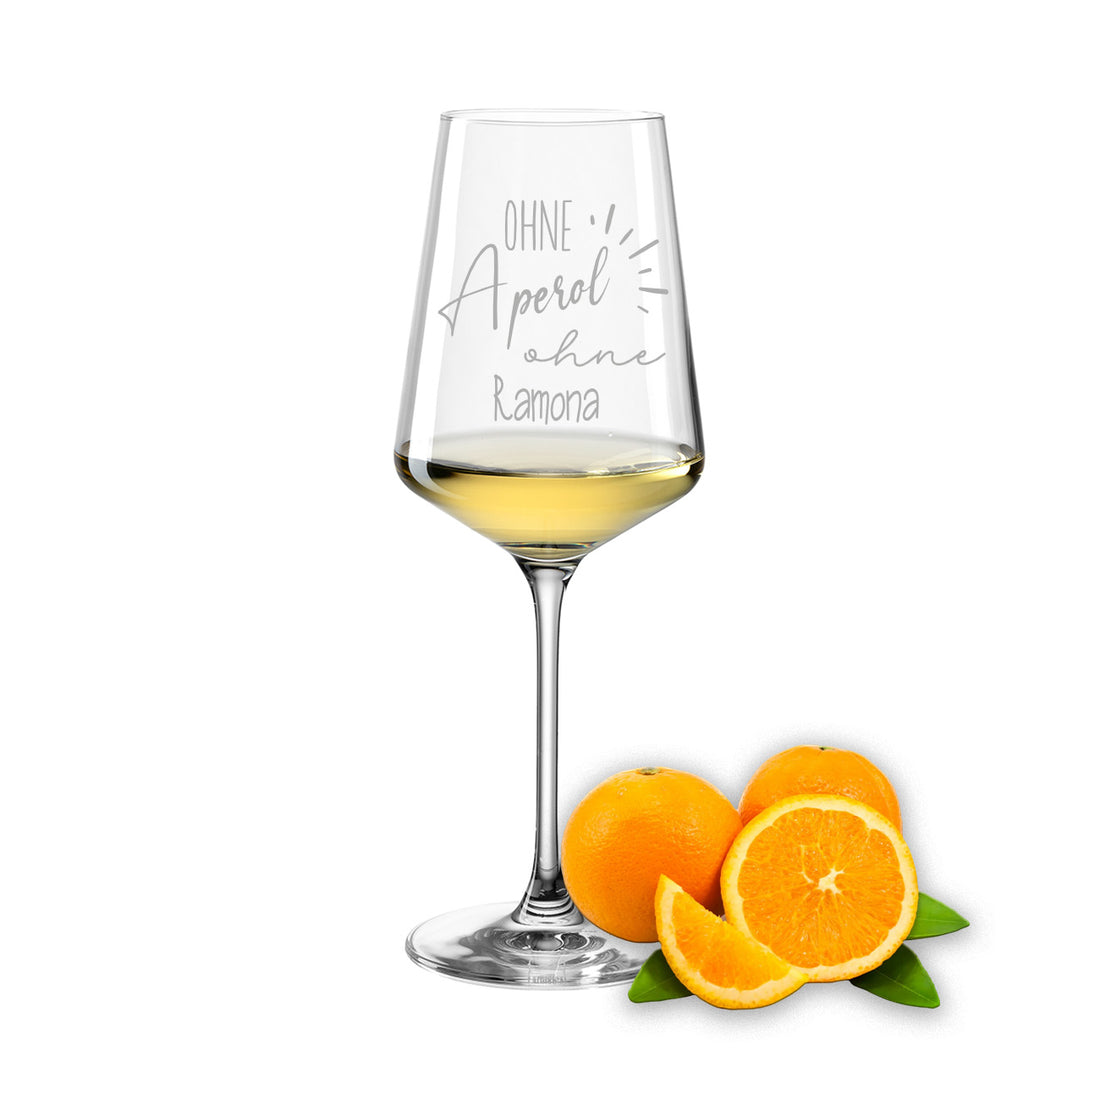 Weinglas mit Gravur Leonardo Puccini "OHNE APEROL OHNE …" mit Wunschname